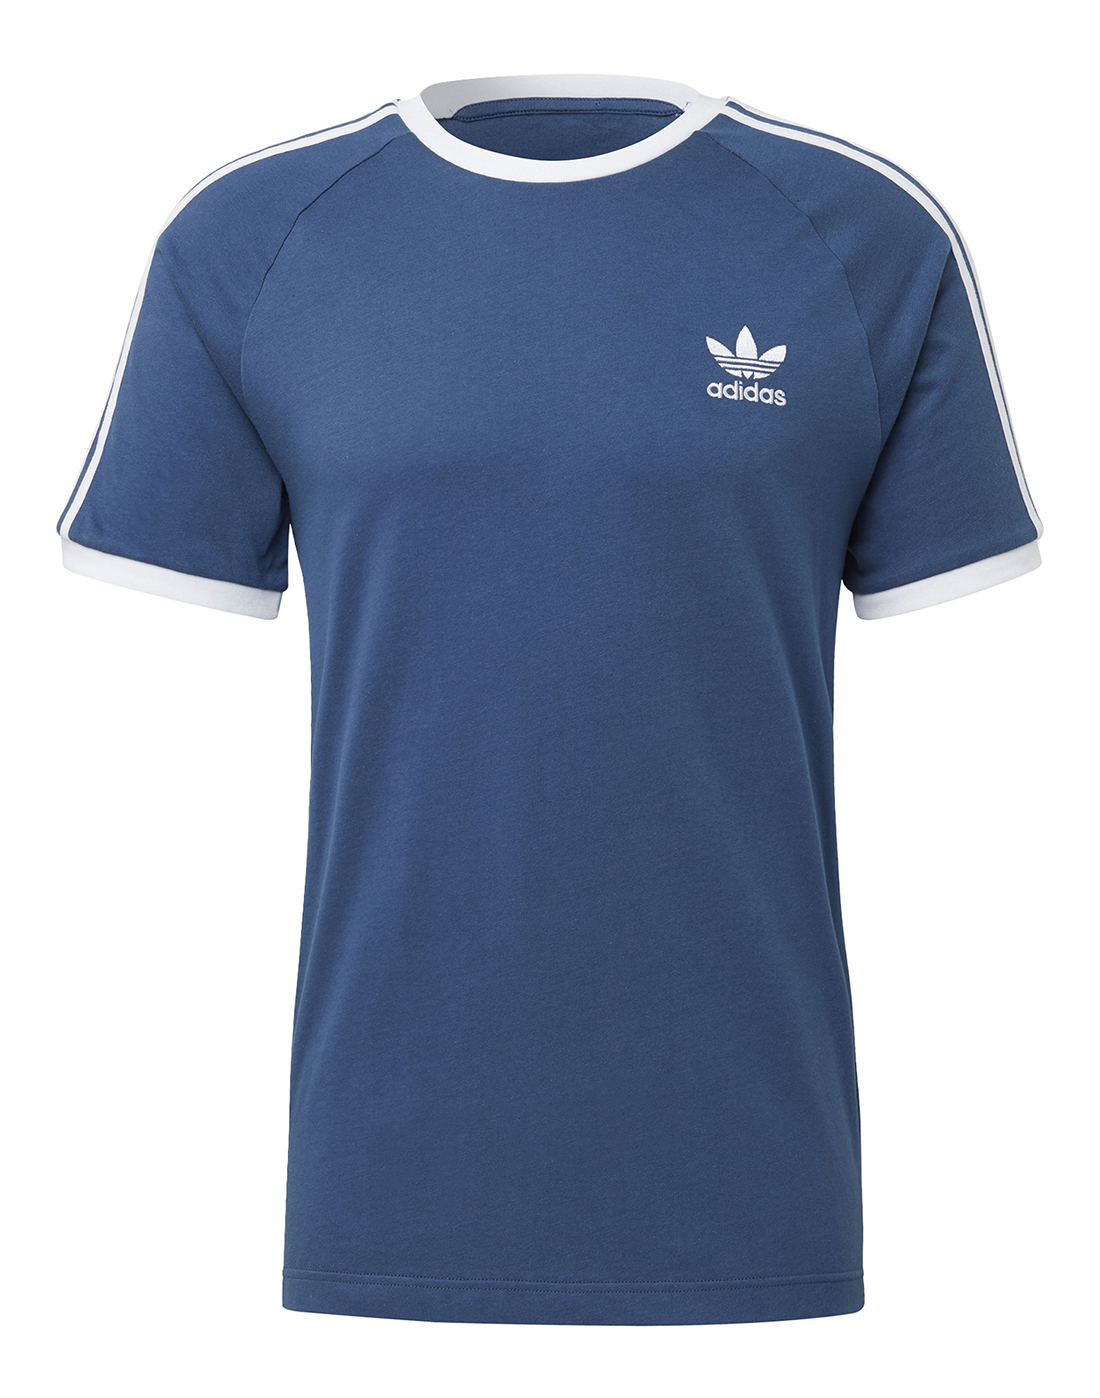 adidas Originals Mens 3-Stripes T-Shirt - Blue | Life Style Sports IE